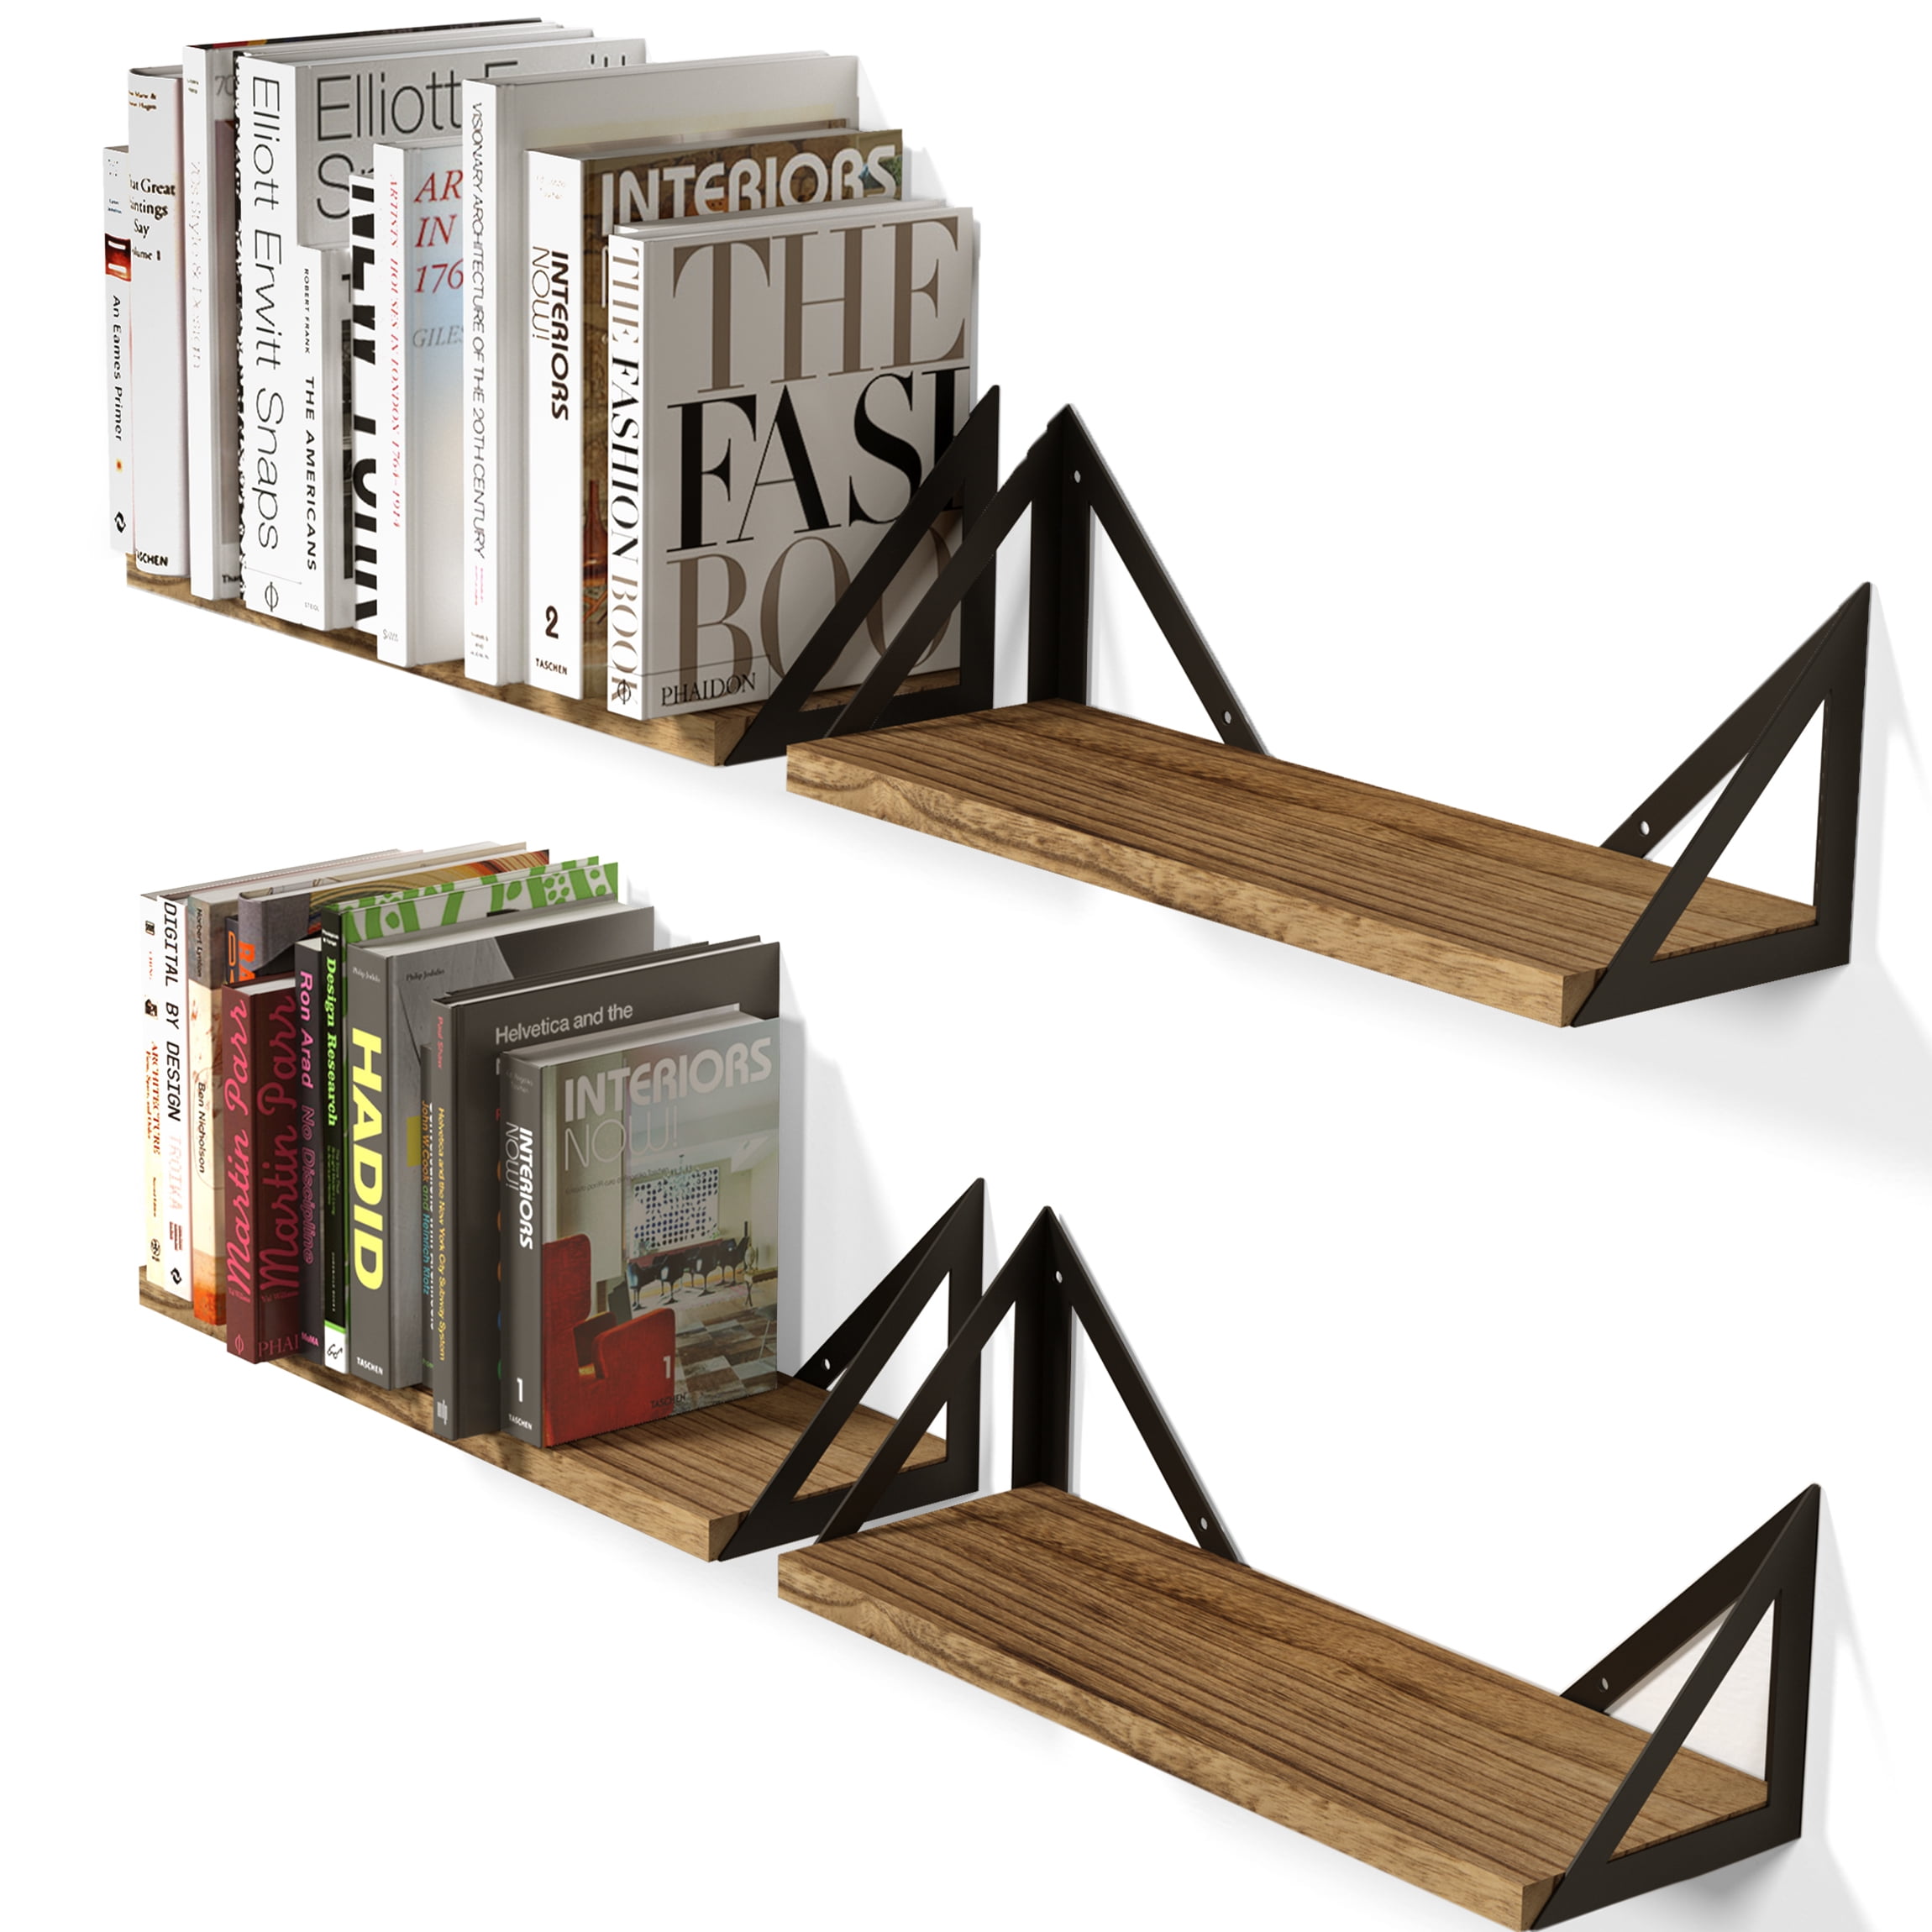 Wallniture Minori Floating Shelves for Wall Storage Natural Wood Wall Shelves with White Brackets Floating Bookshelf Set of 3